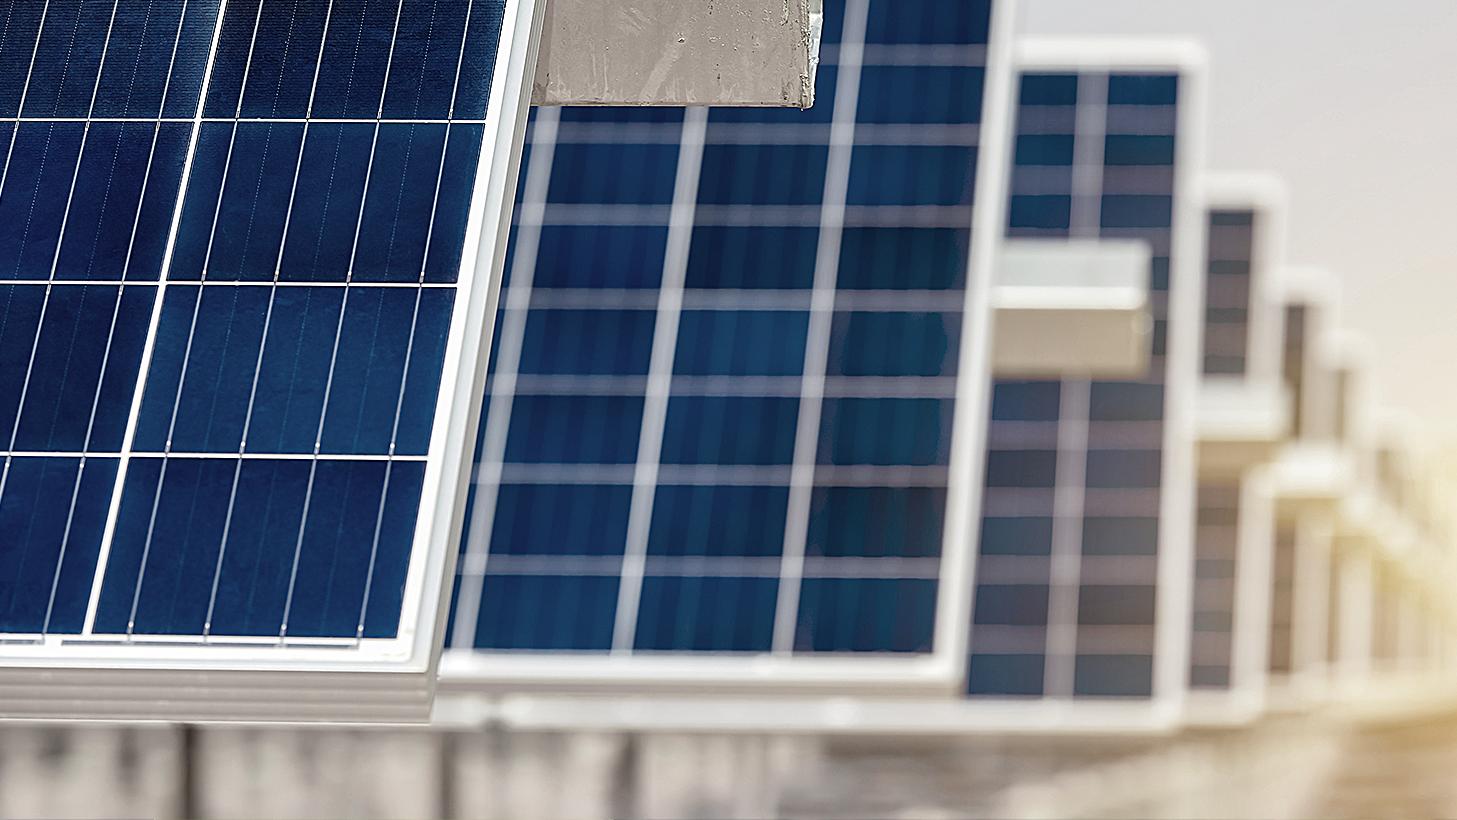 Detailbild des Photovoltaik-Solarmoduls im Freien